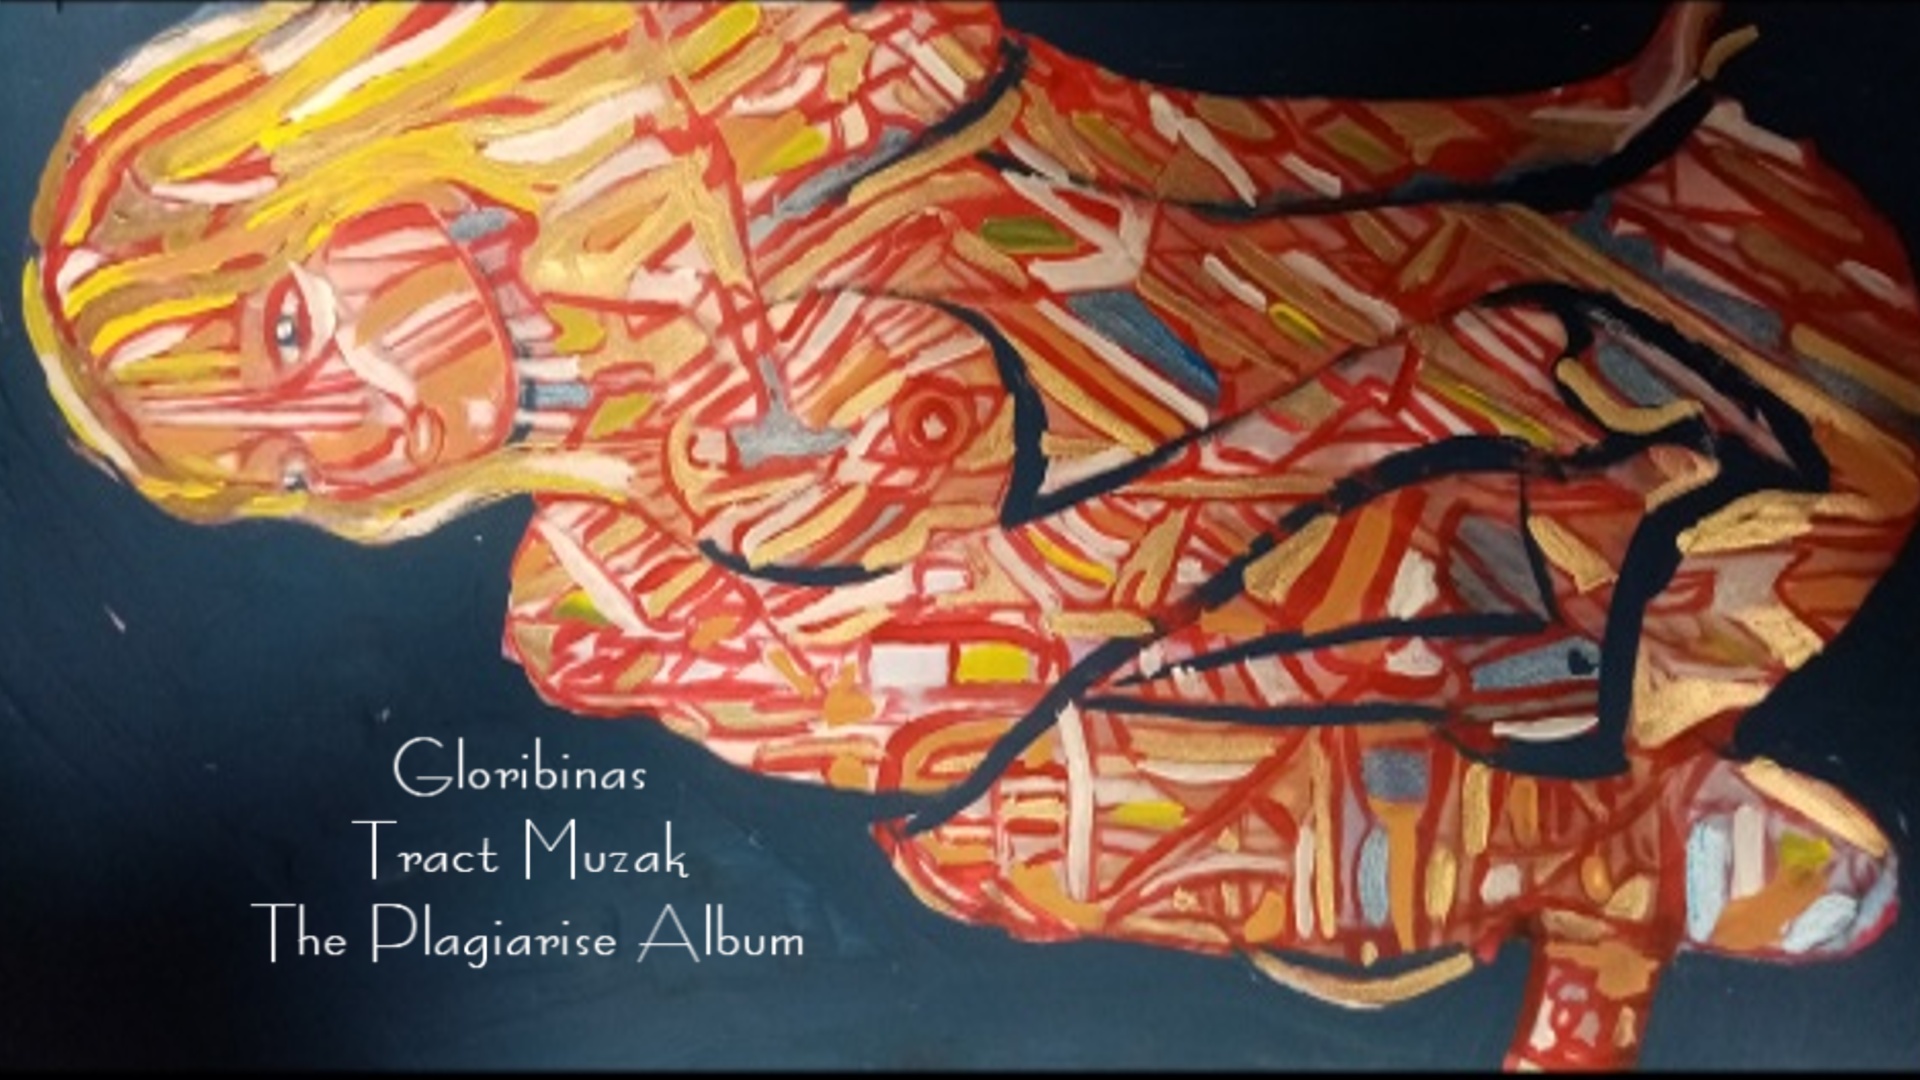 Gloribinas Tract Muzak The Plagiarise Album